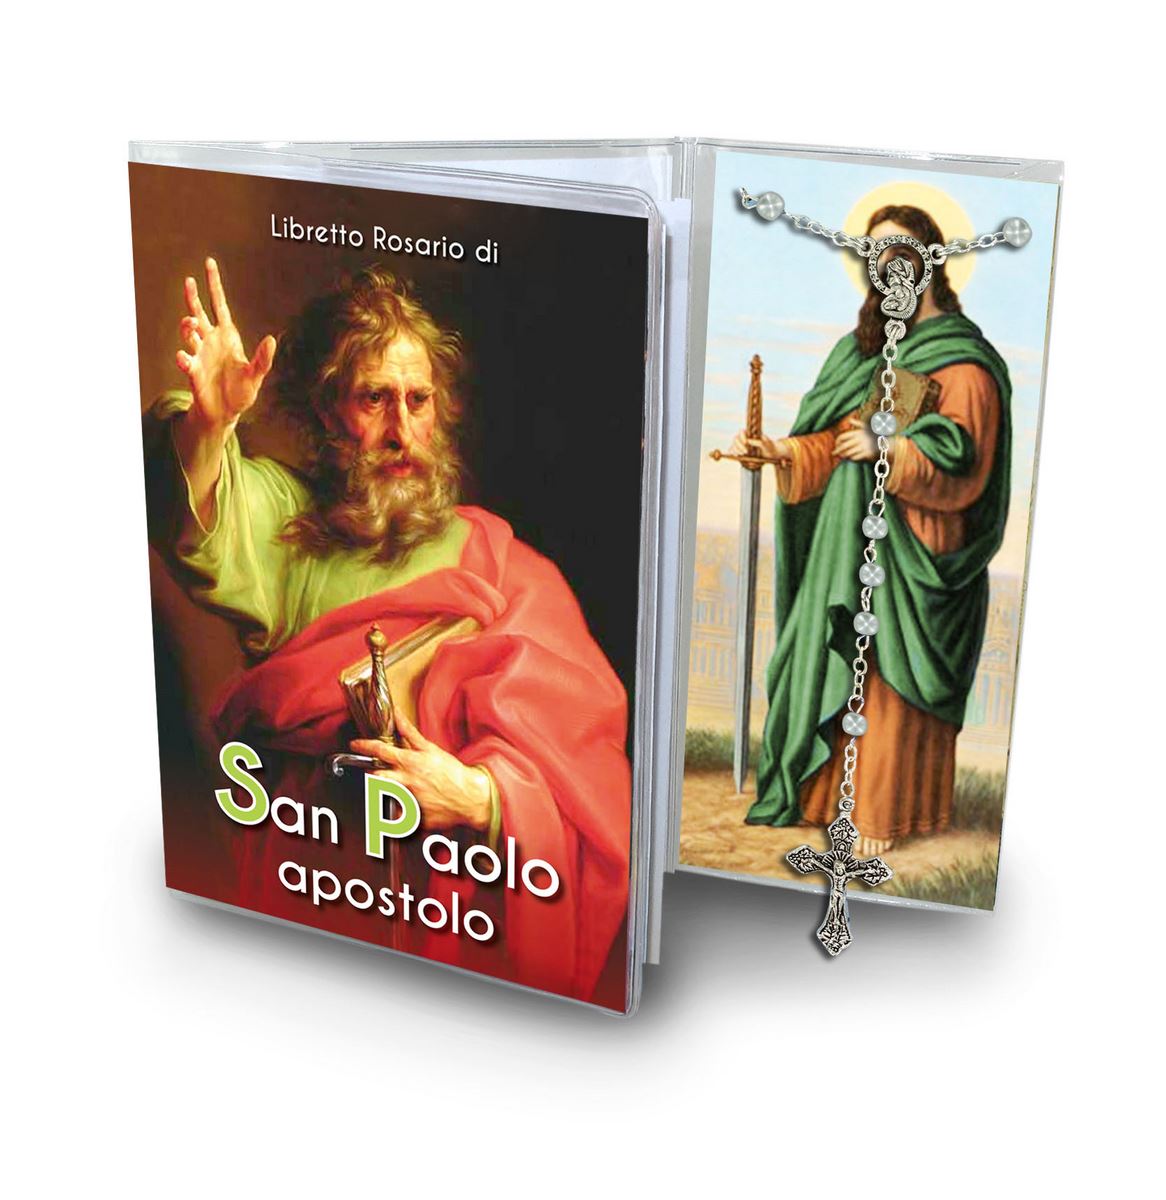 libretto con rosario san paolo apostolo - italiano